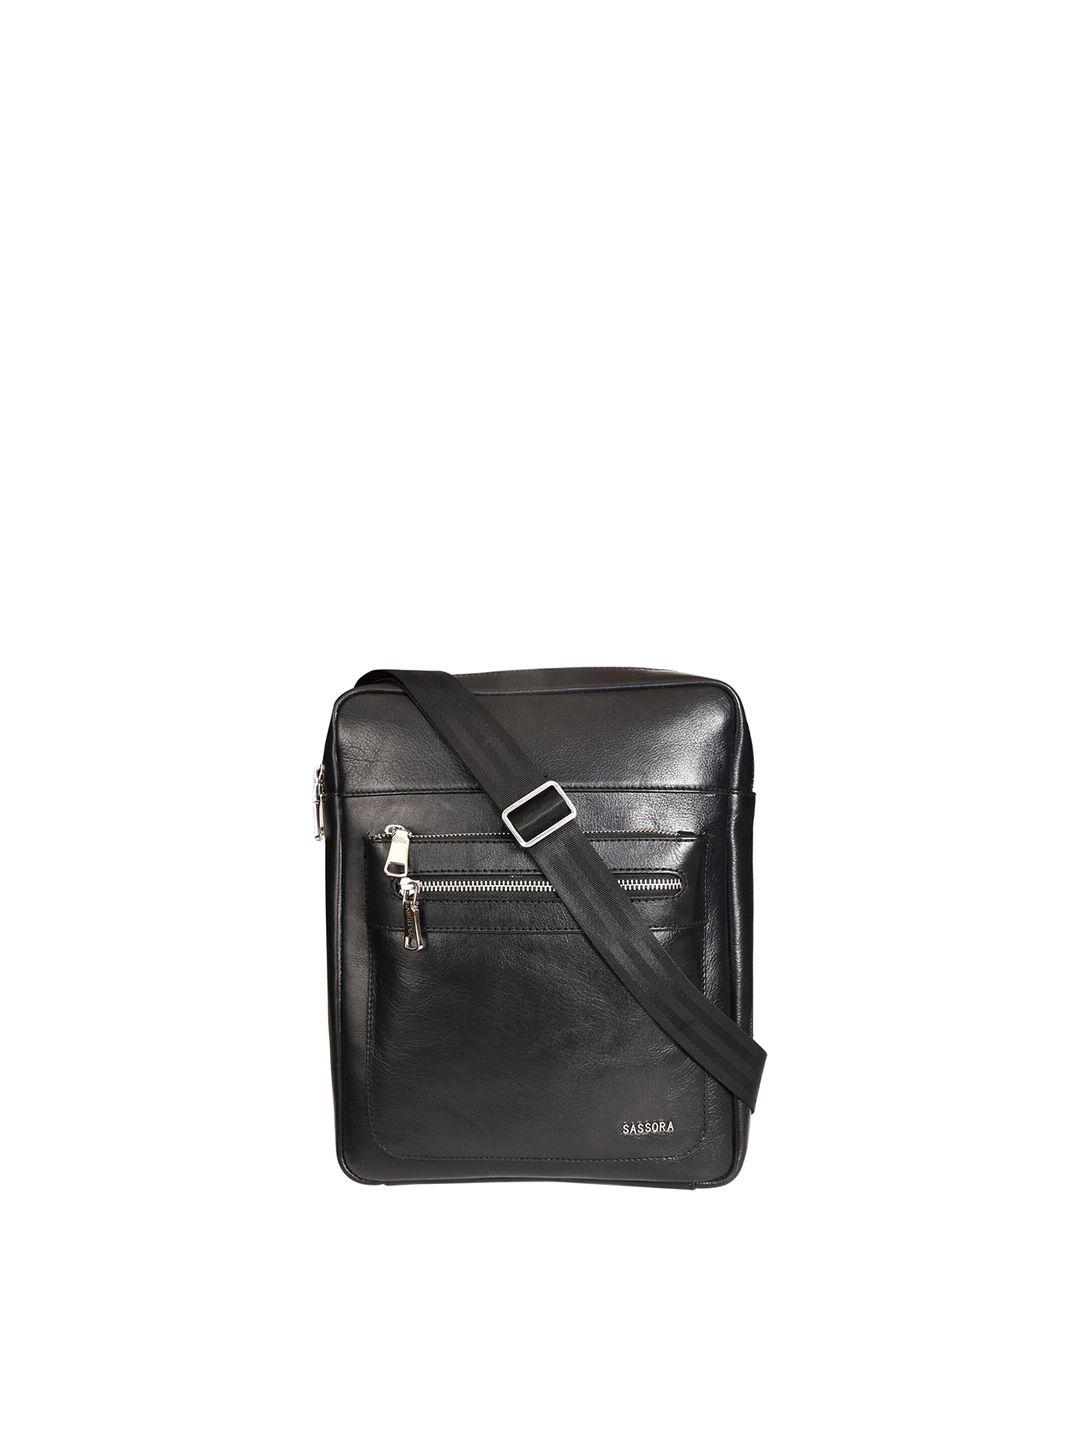 sassora men genuine leather messenger bag